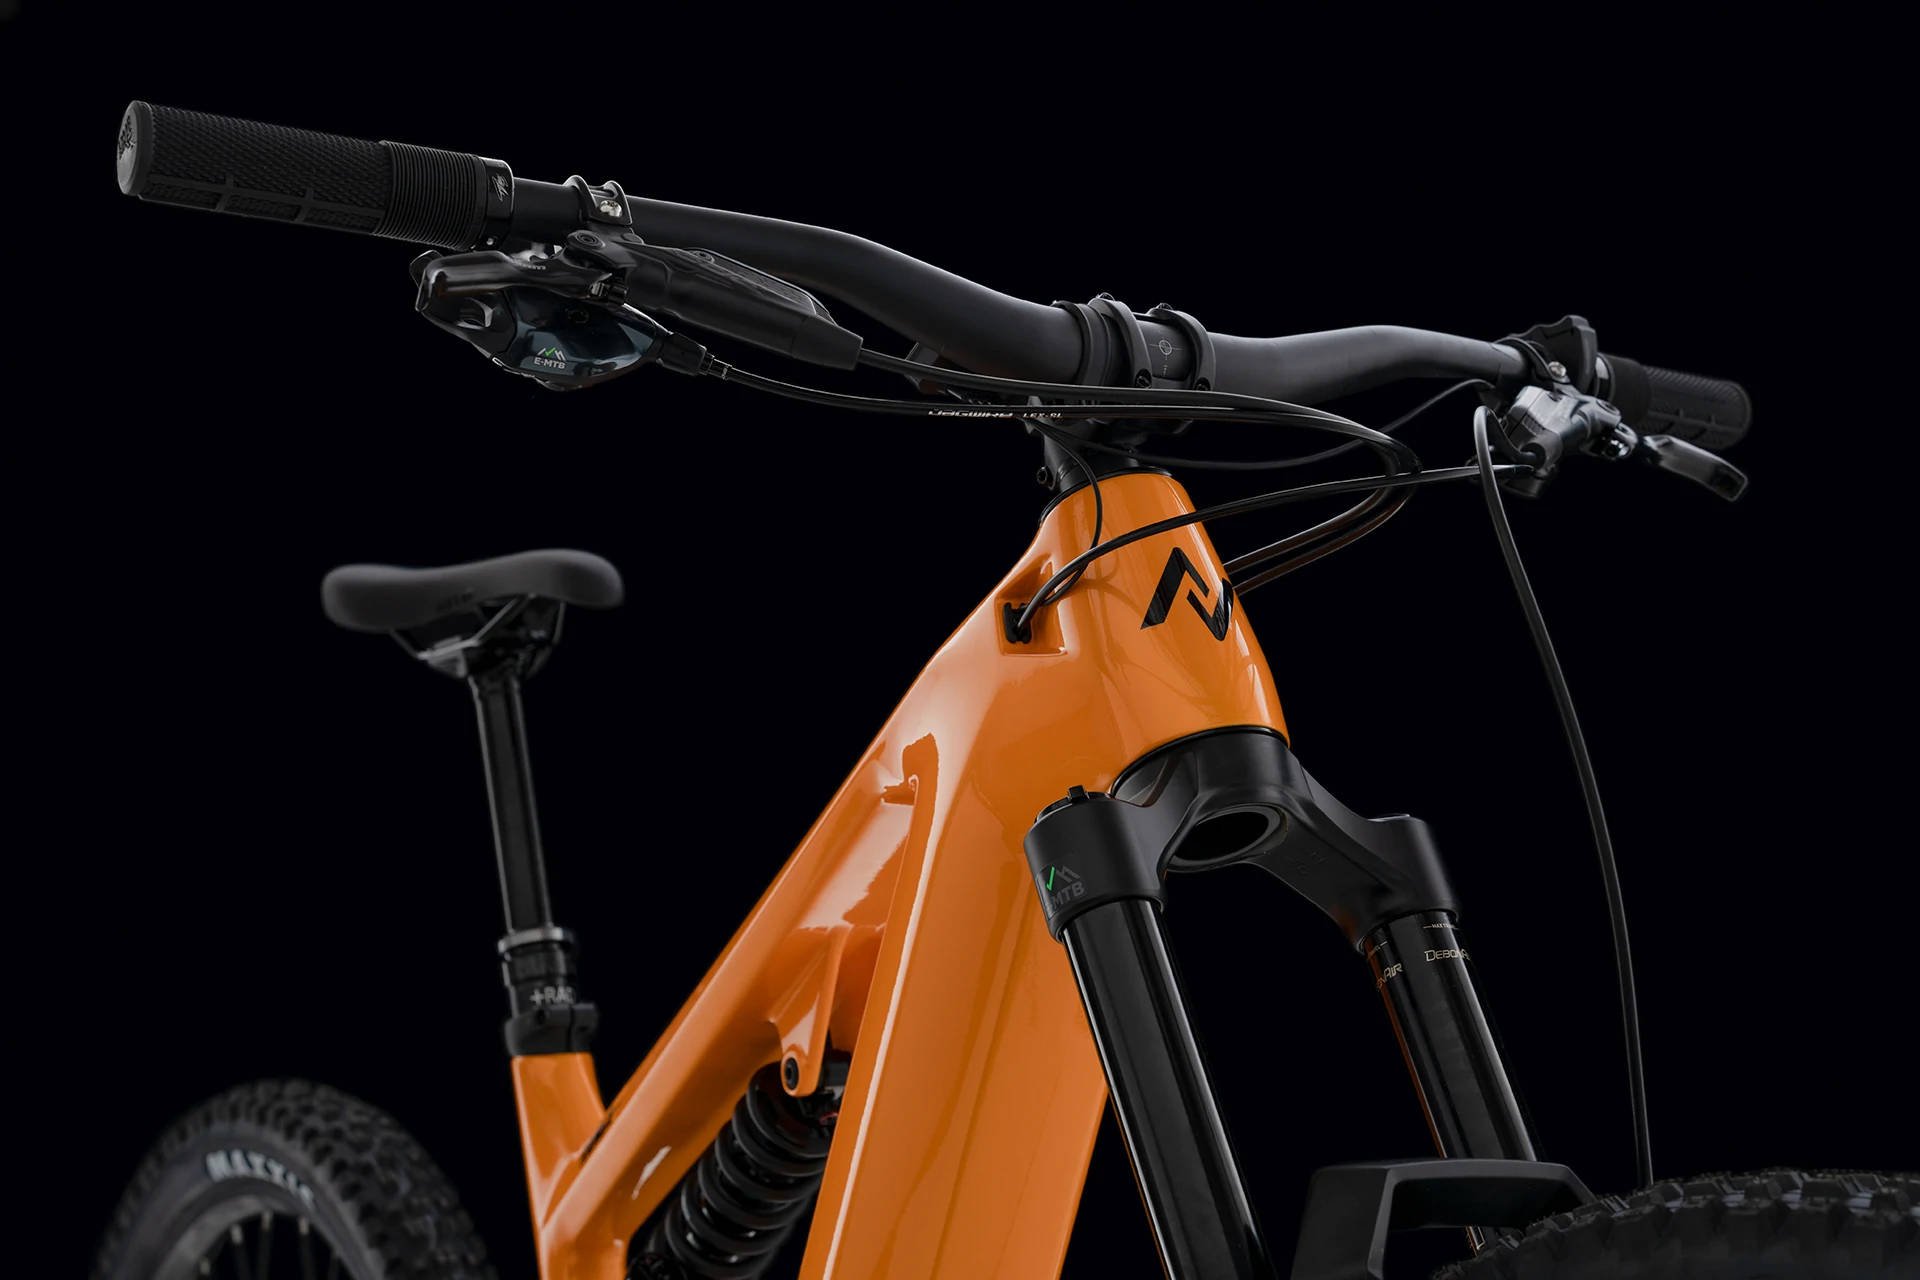 Norco Range VLT C2 Electric Full Suspension Mountain Bike in Orange Black Stem and Fork